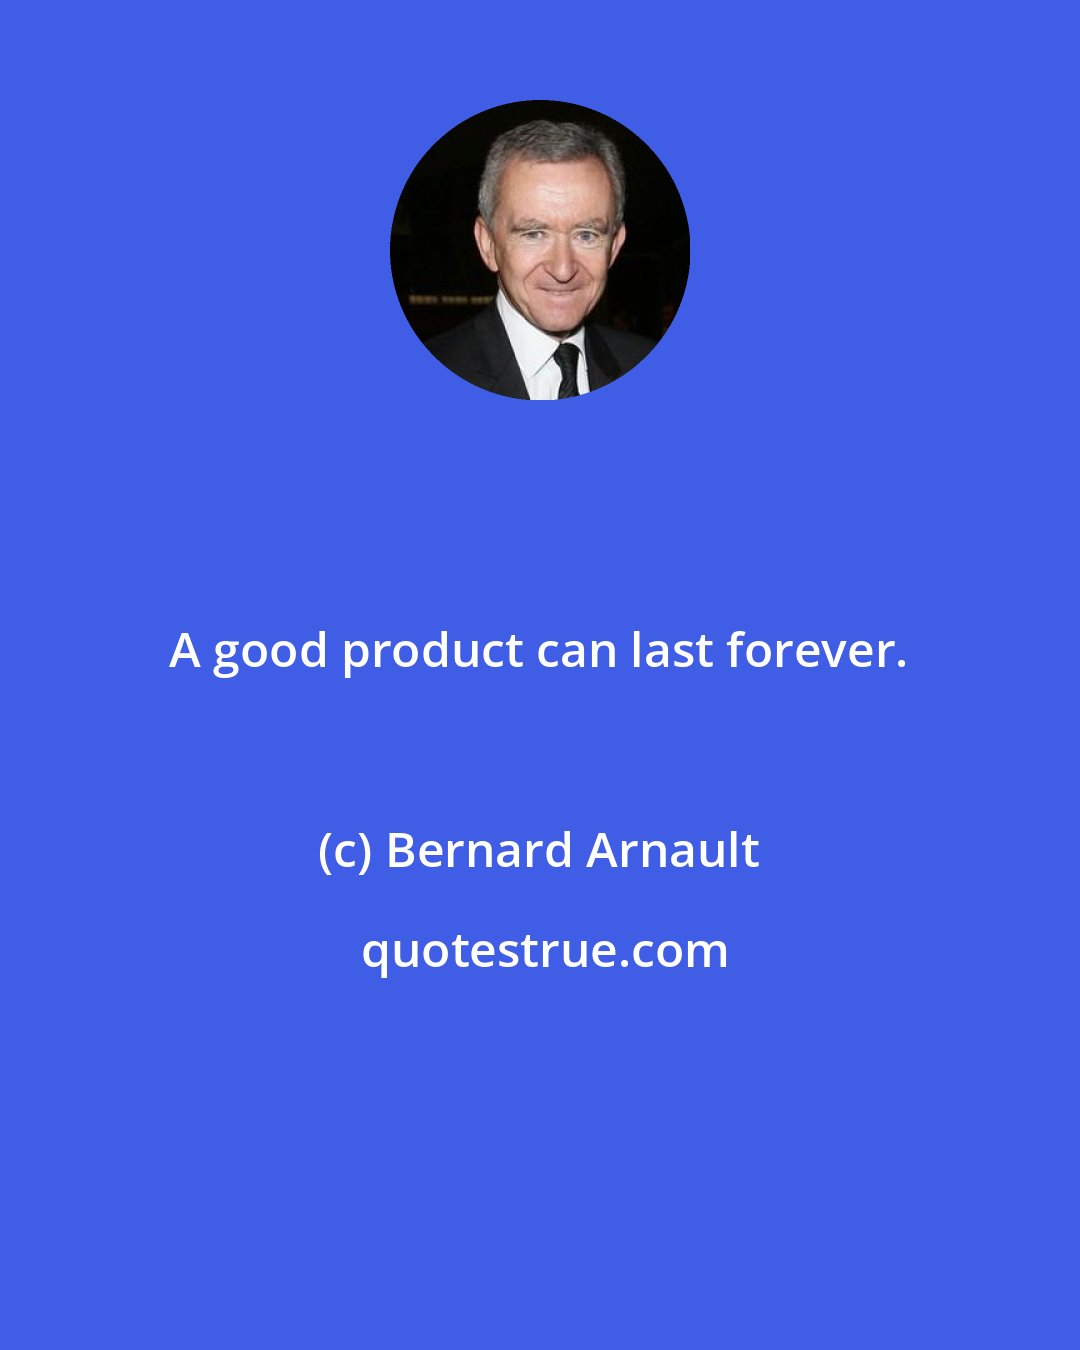 Bernard Arnault: A good product can last forever.